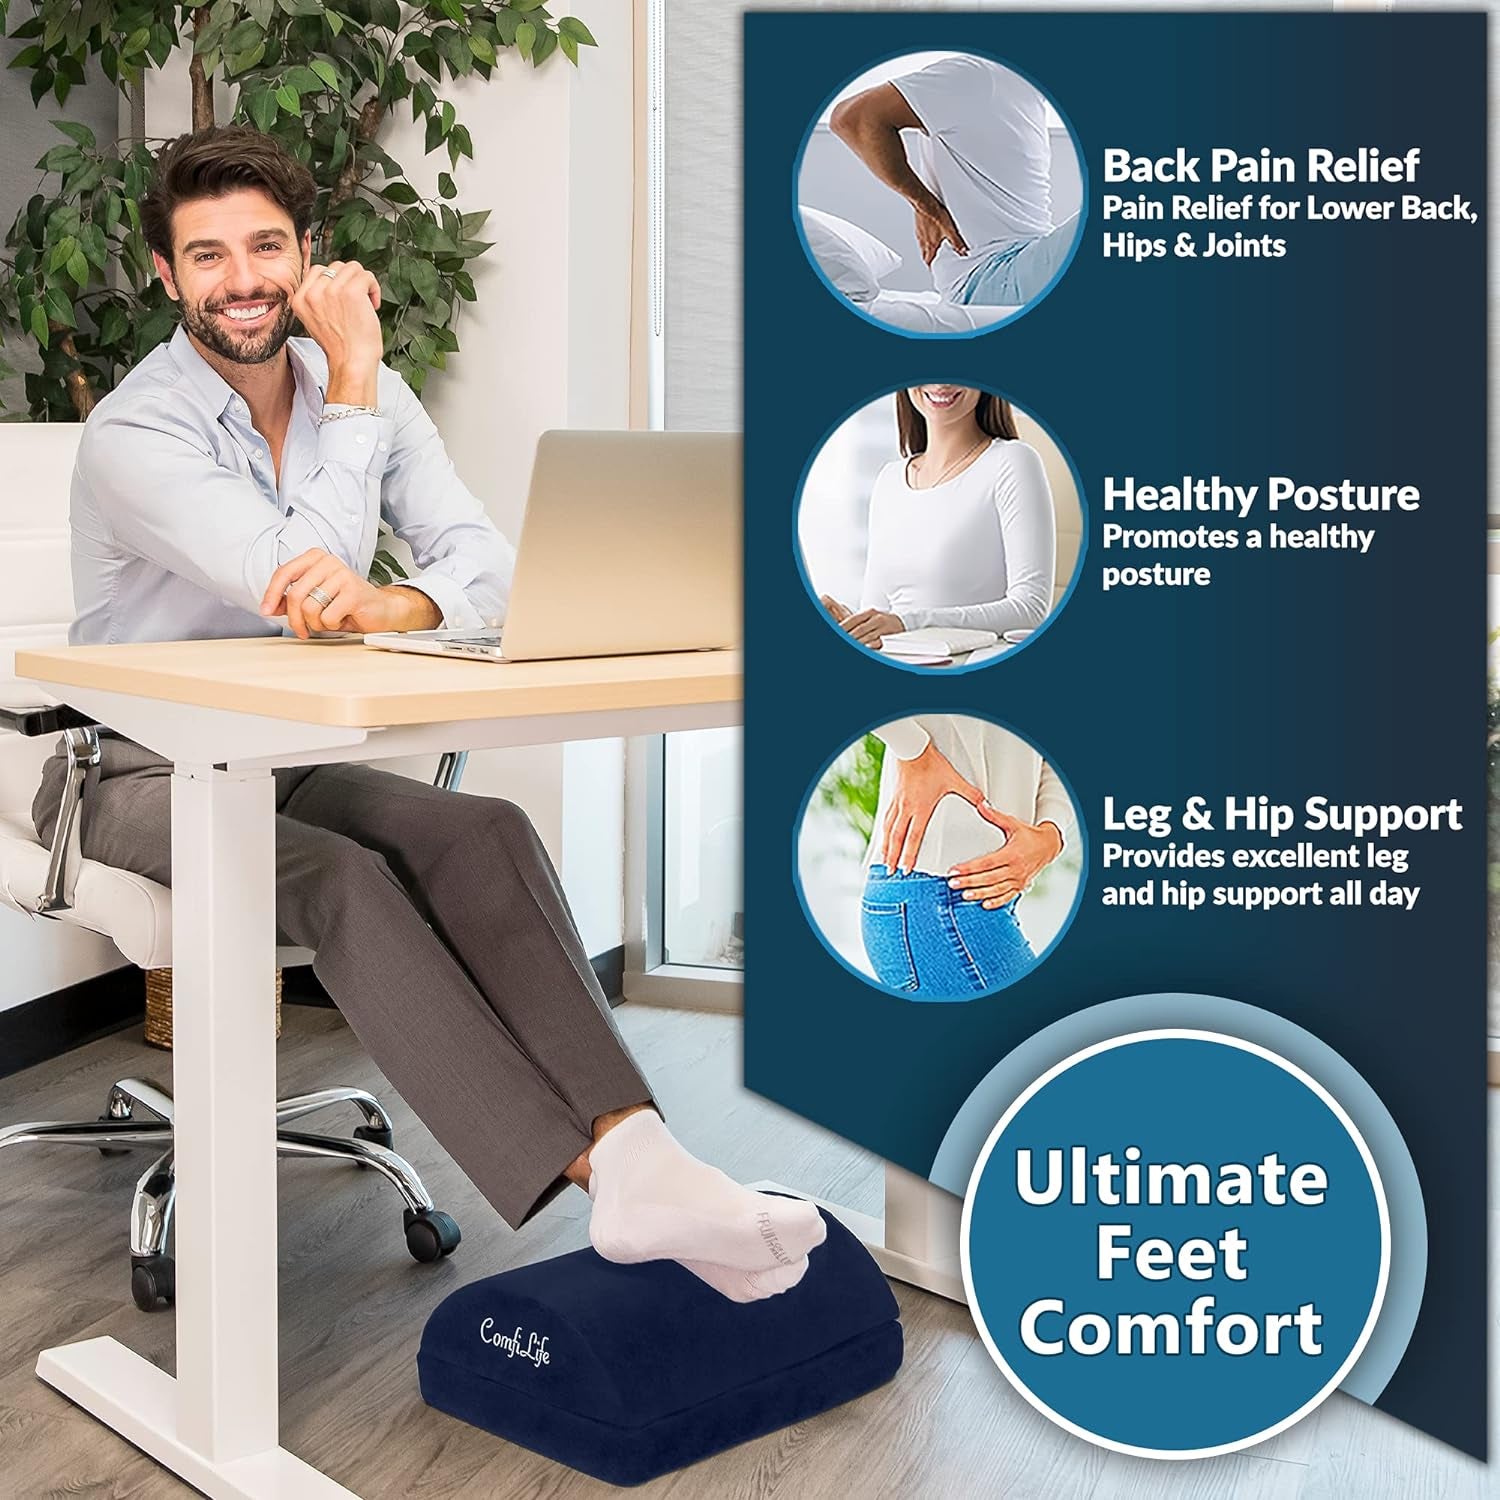 Foot Rest under Desk for Office Use – Adjustable Height Memory Foam Foot Stool under Desk for Office Chair & Gaming Chair – Ergonomic under Desk Foot Rest for Back & Hip Pain Relief (Navy)